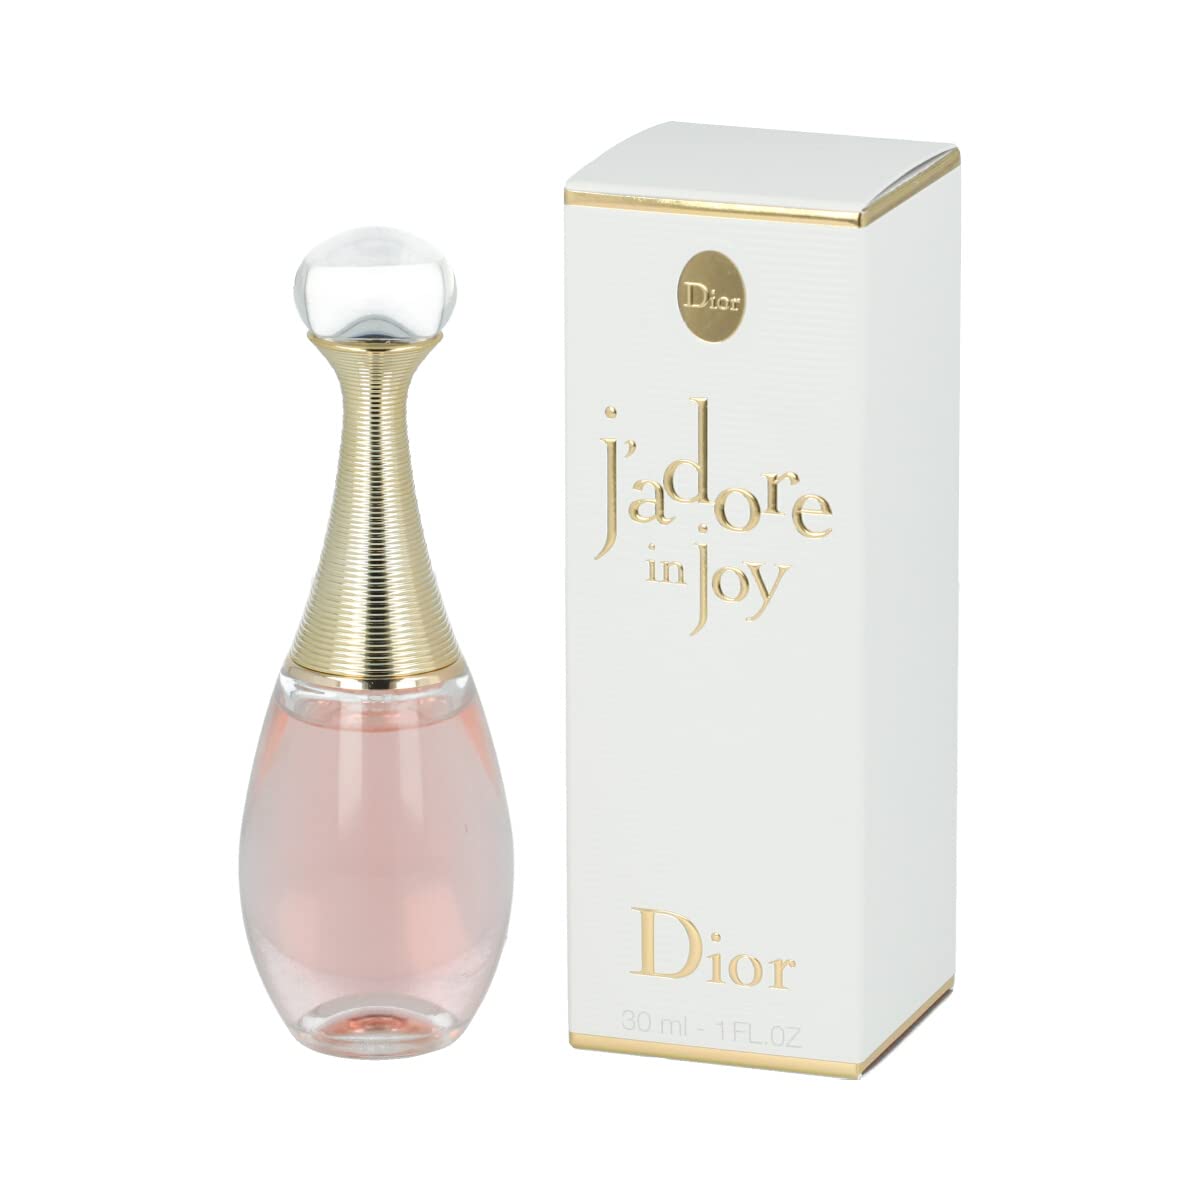 DIOR Jadore Eau de Parfum 30ml  Adore Beauty